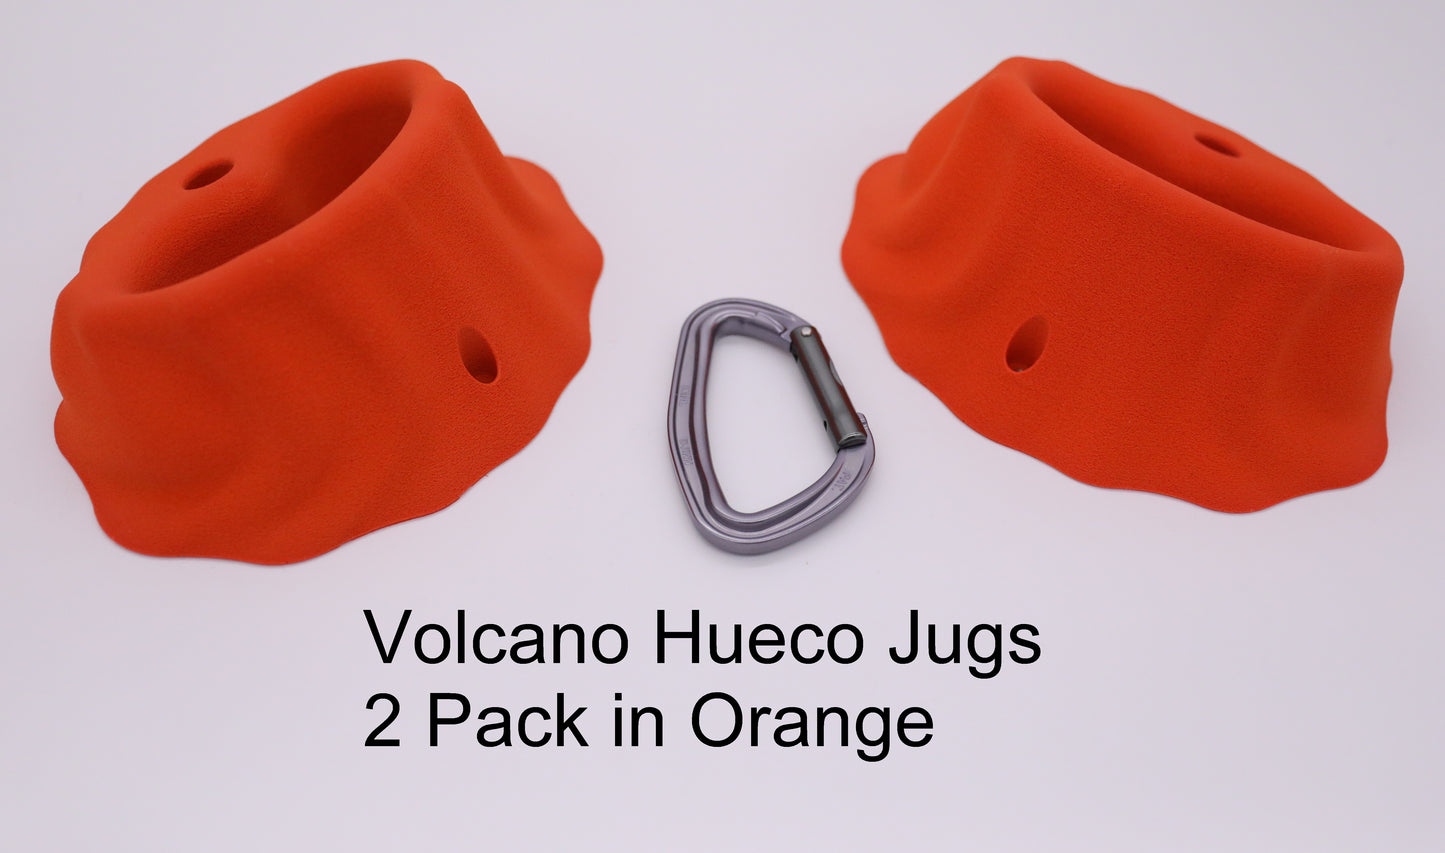 Large Volcano Hueco Jugs, 2 Bolt On Climbing Holds